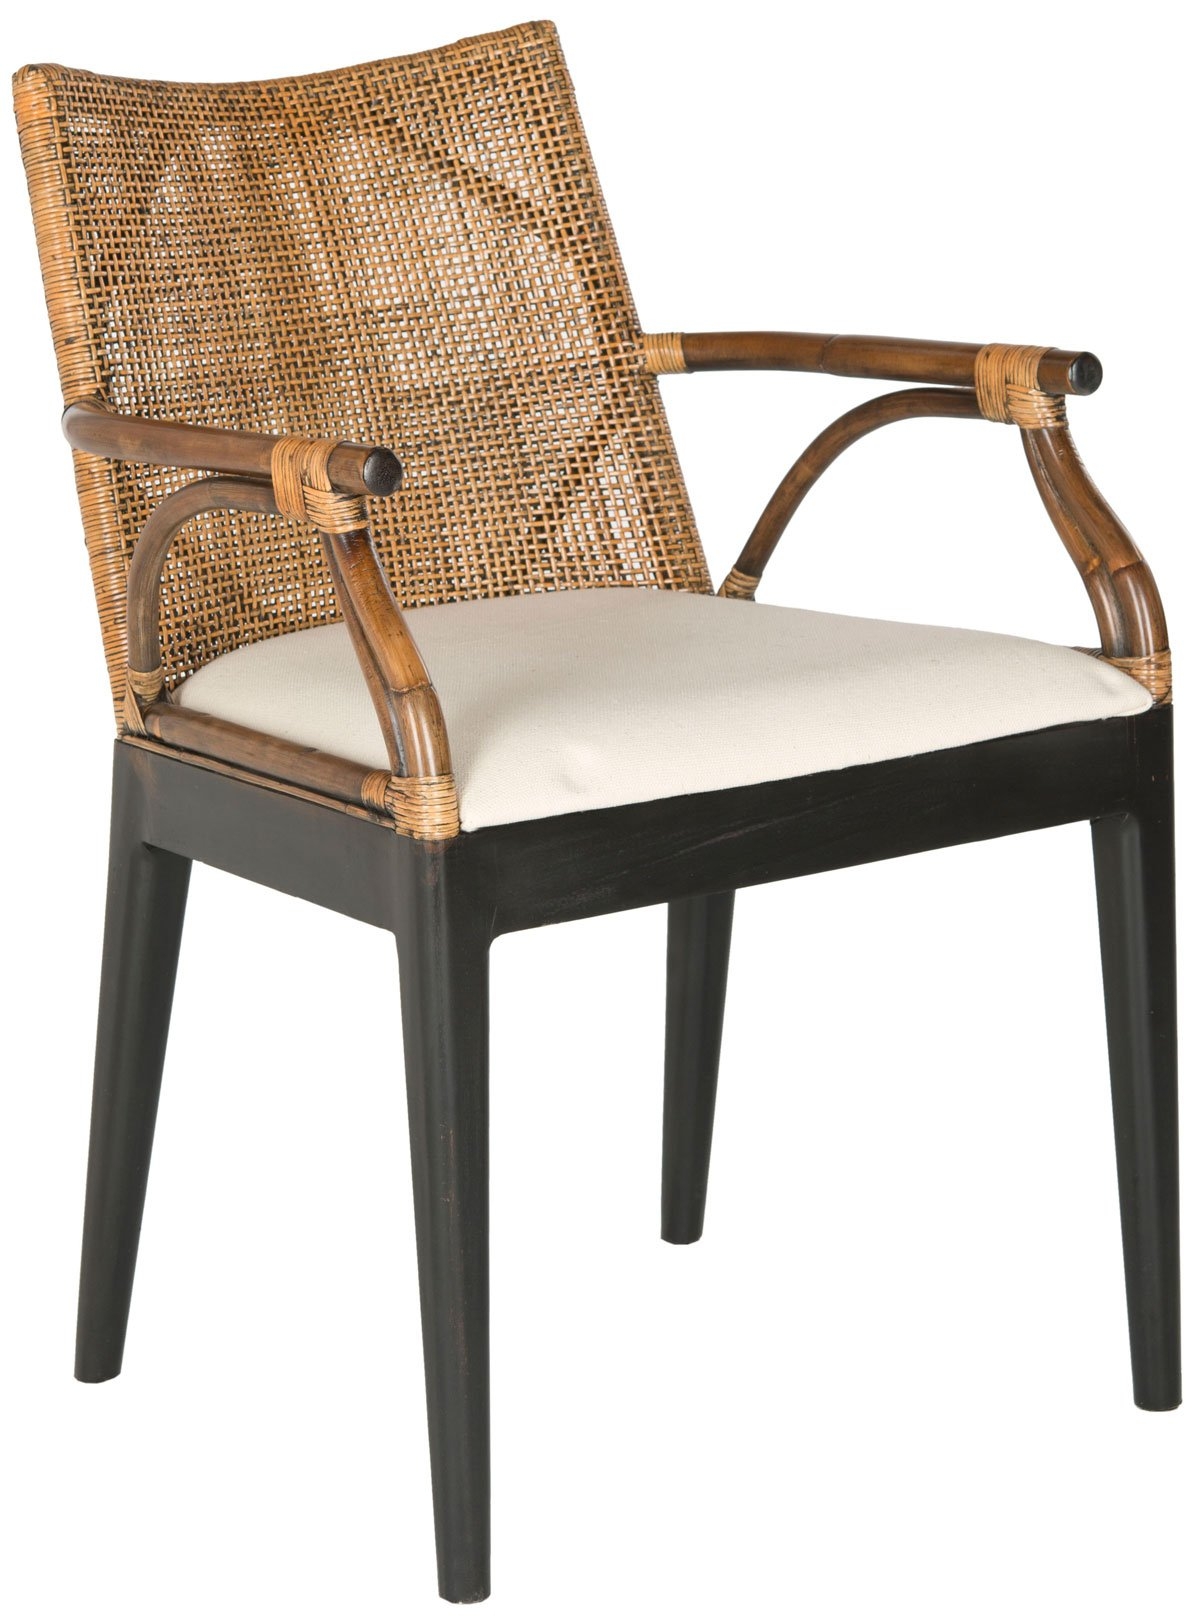 Gianni Arm Chair - Brown/White - Arlo Home - Image 3